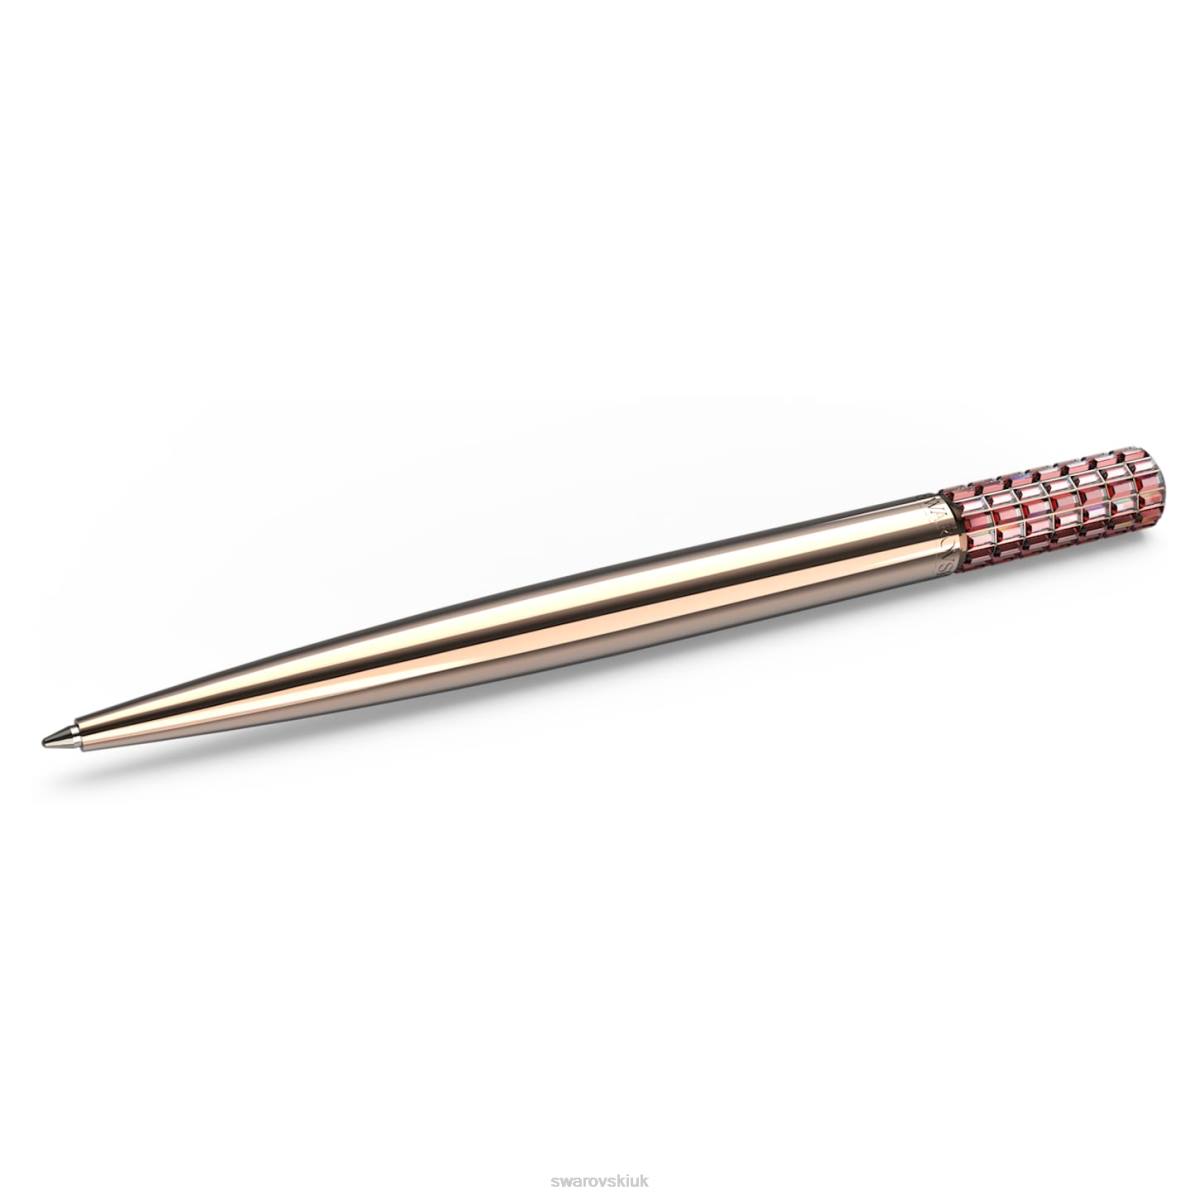 Accessories Swarovski Ballpoint pen Pink, Rose gold-tone plated 48JX1289